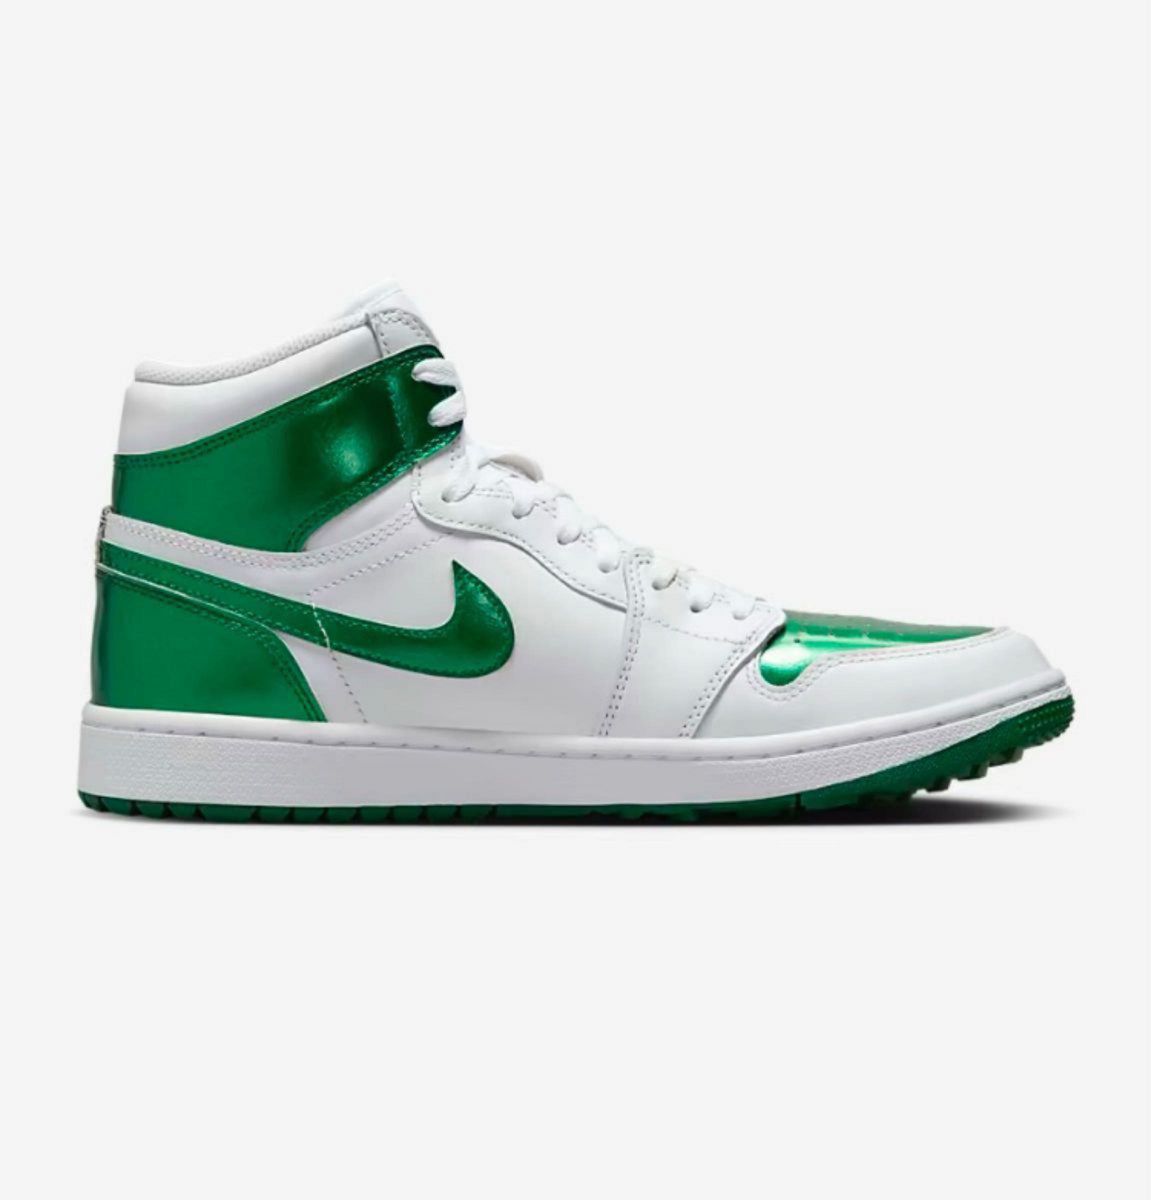 Nike Air Jordan 1 High Golf "Metallic Green"